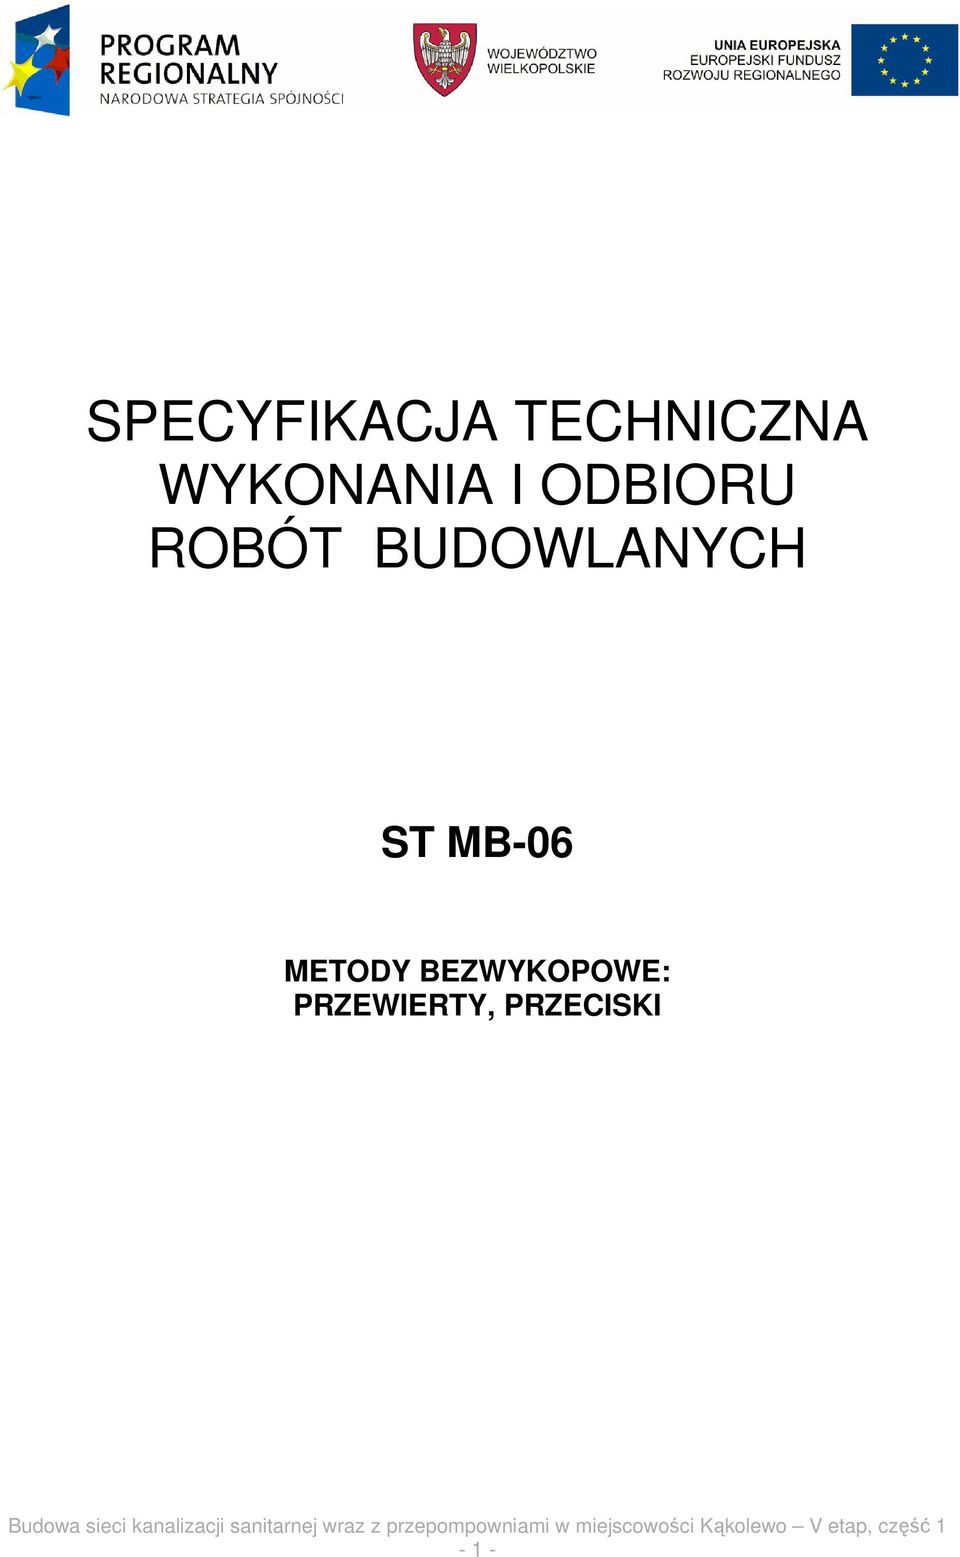 BUDOWLANYCH ST MB-06 METODY